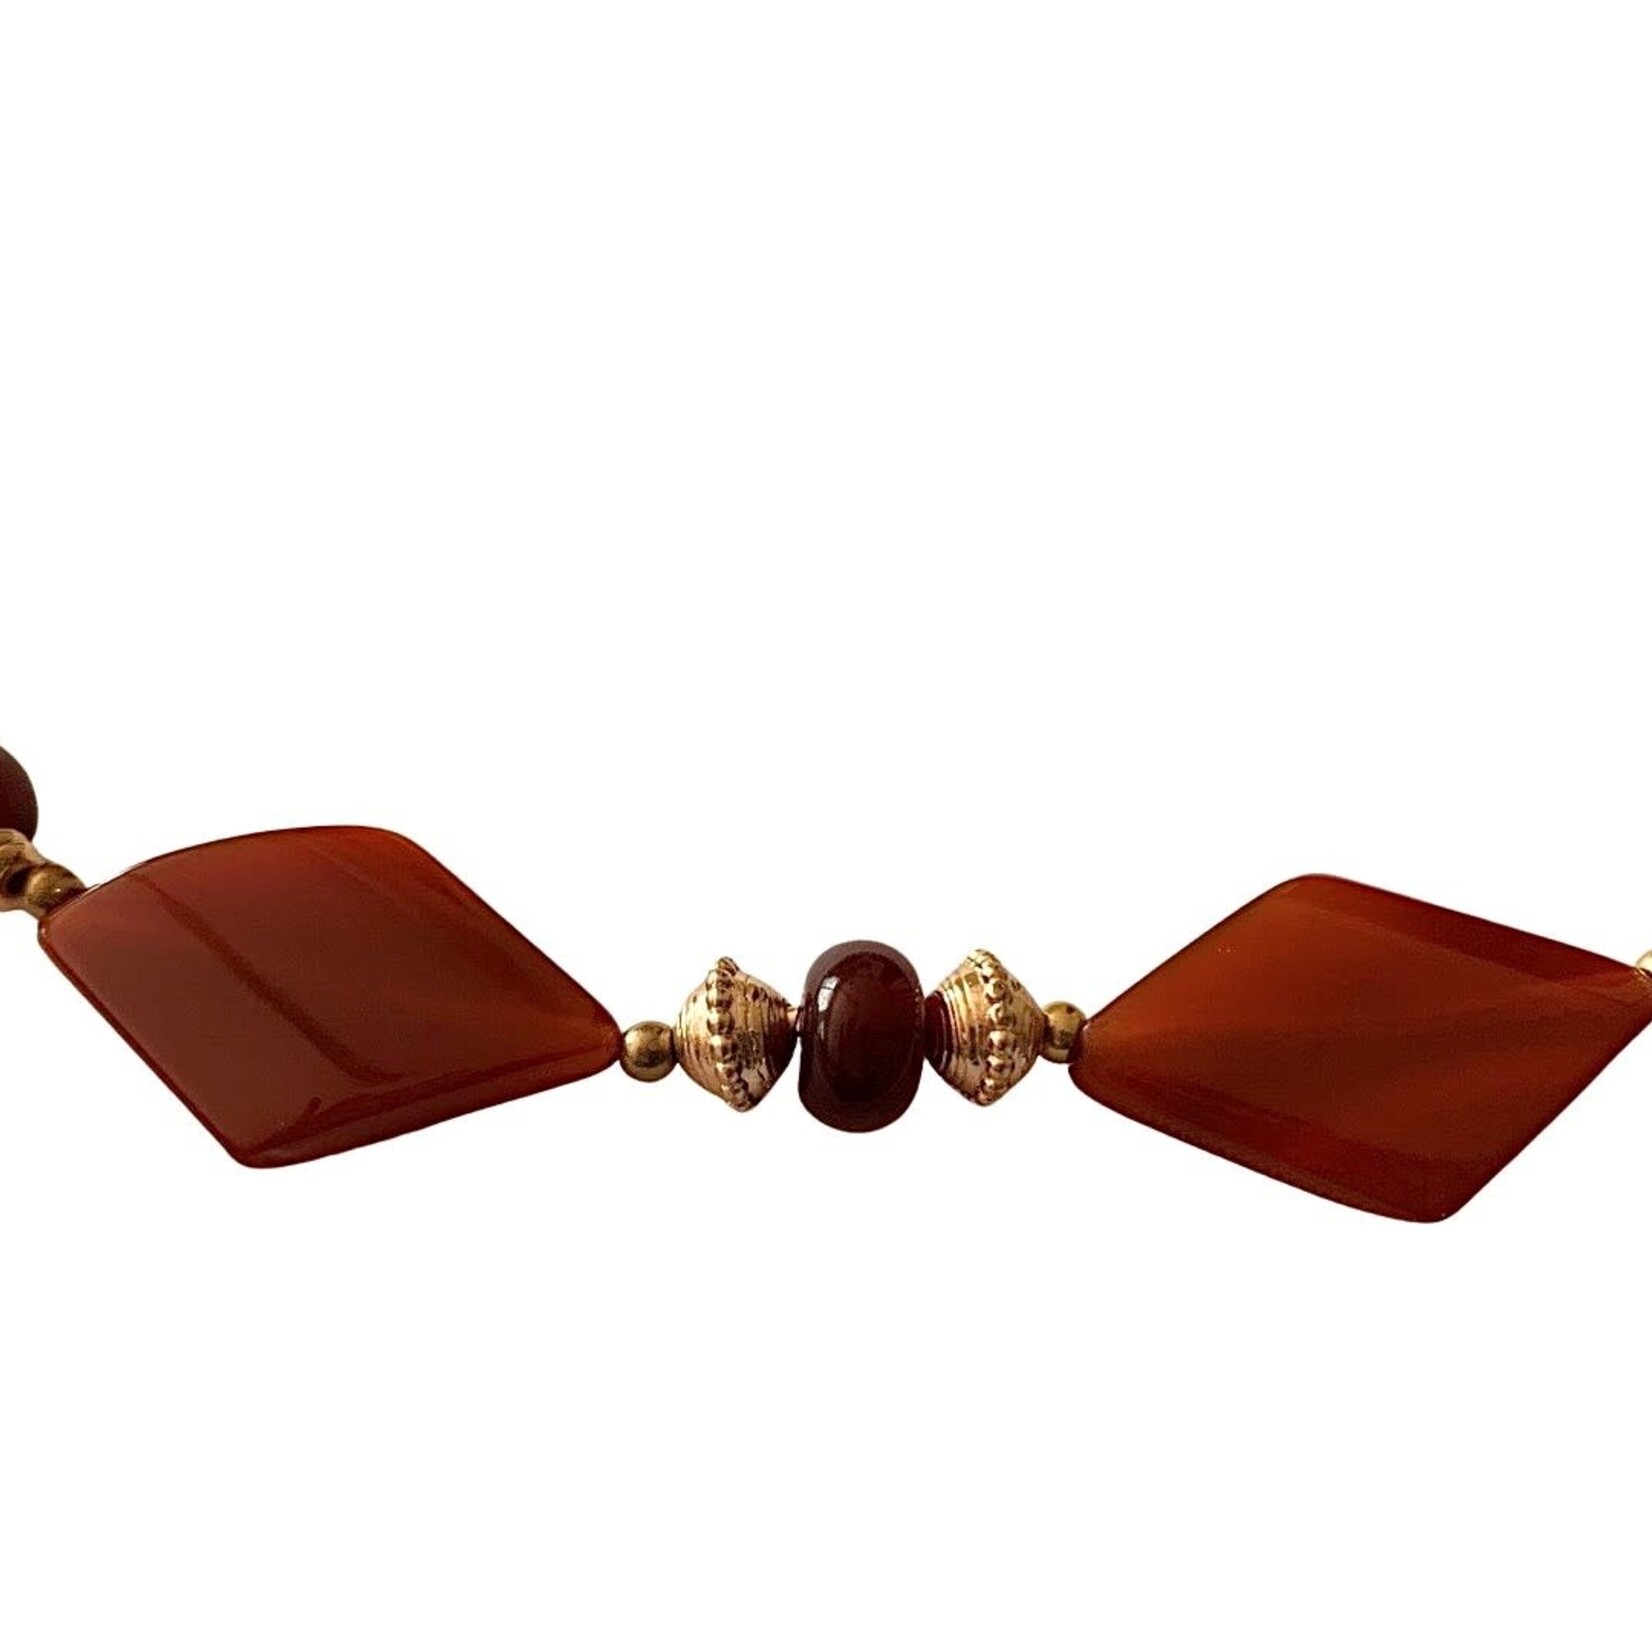 S.S Jewellery Carnelian & Red Jasper Gemstone Gold Necklace